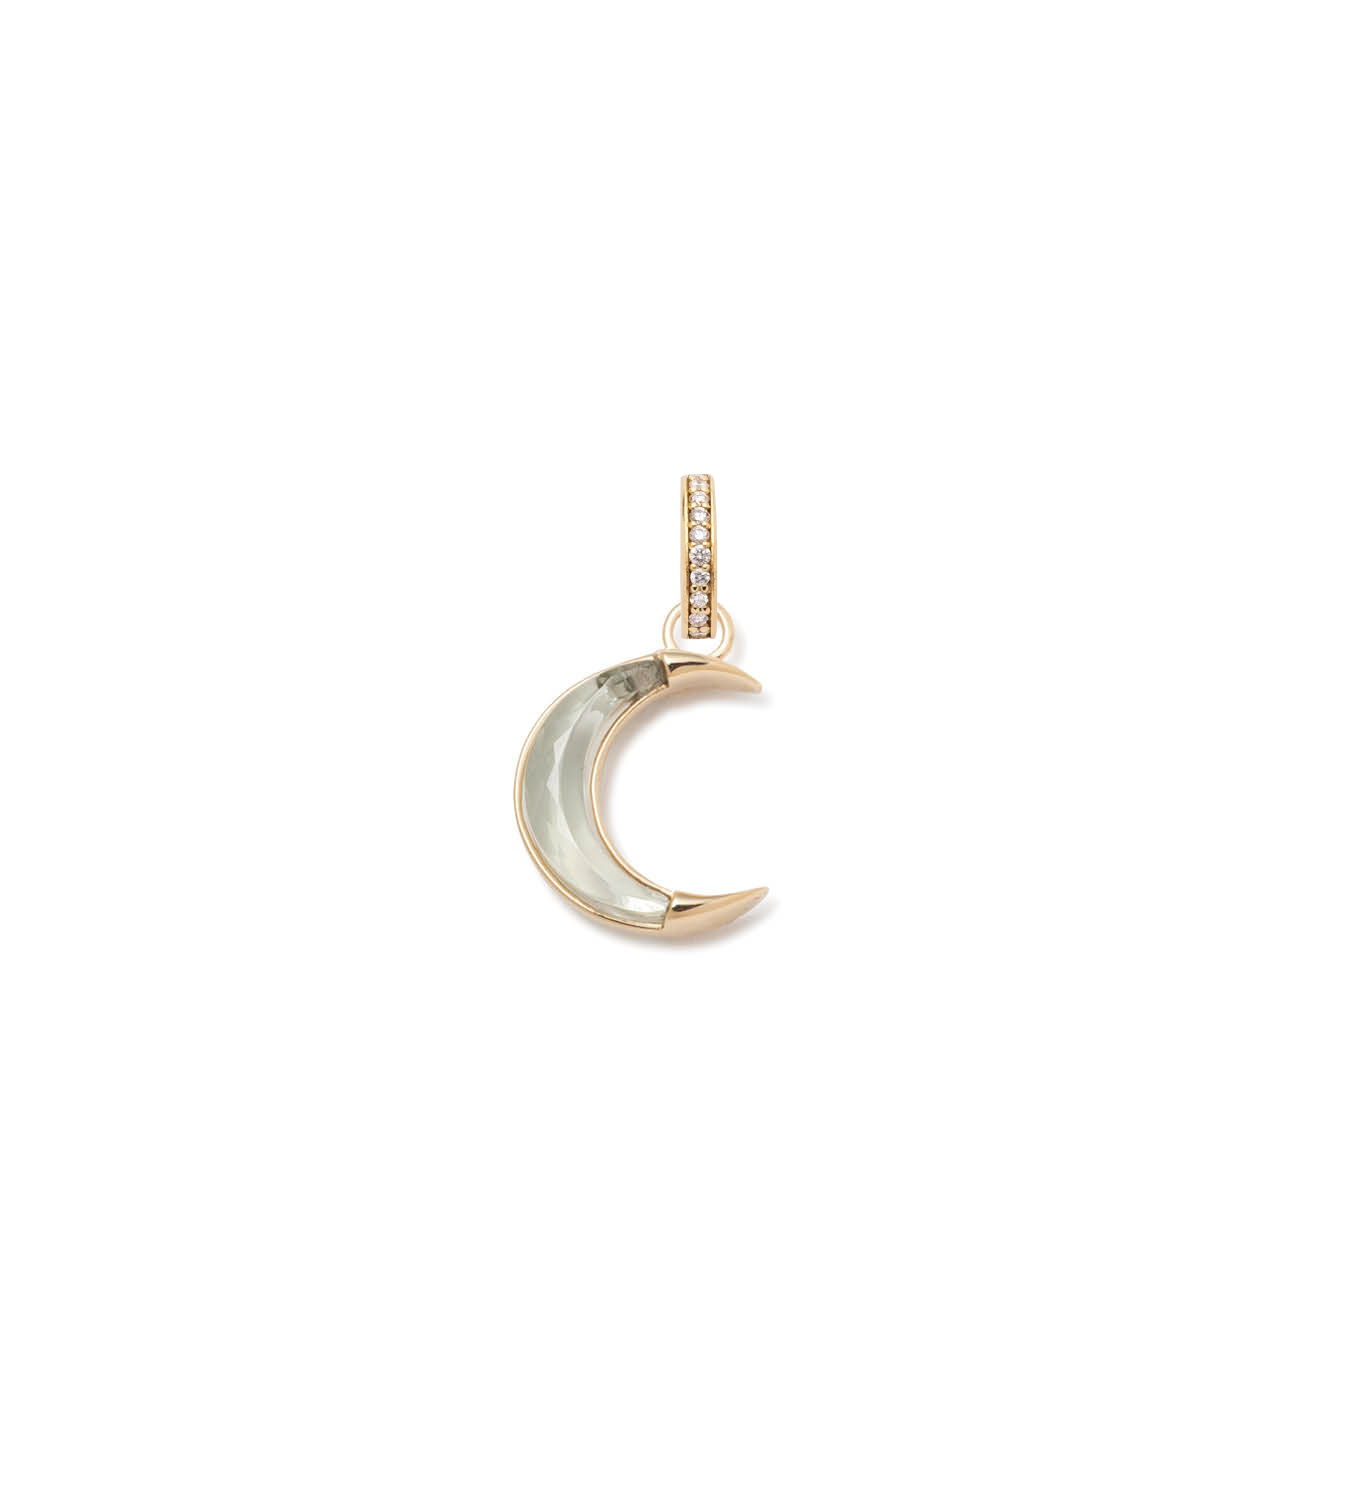 Gemstone Crescent - Karma : 15mm Medallion Prasiolite with Oval Pushgate